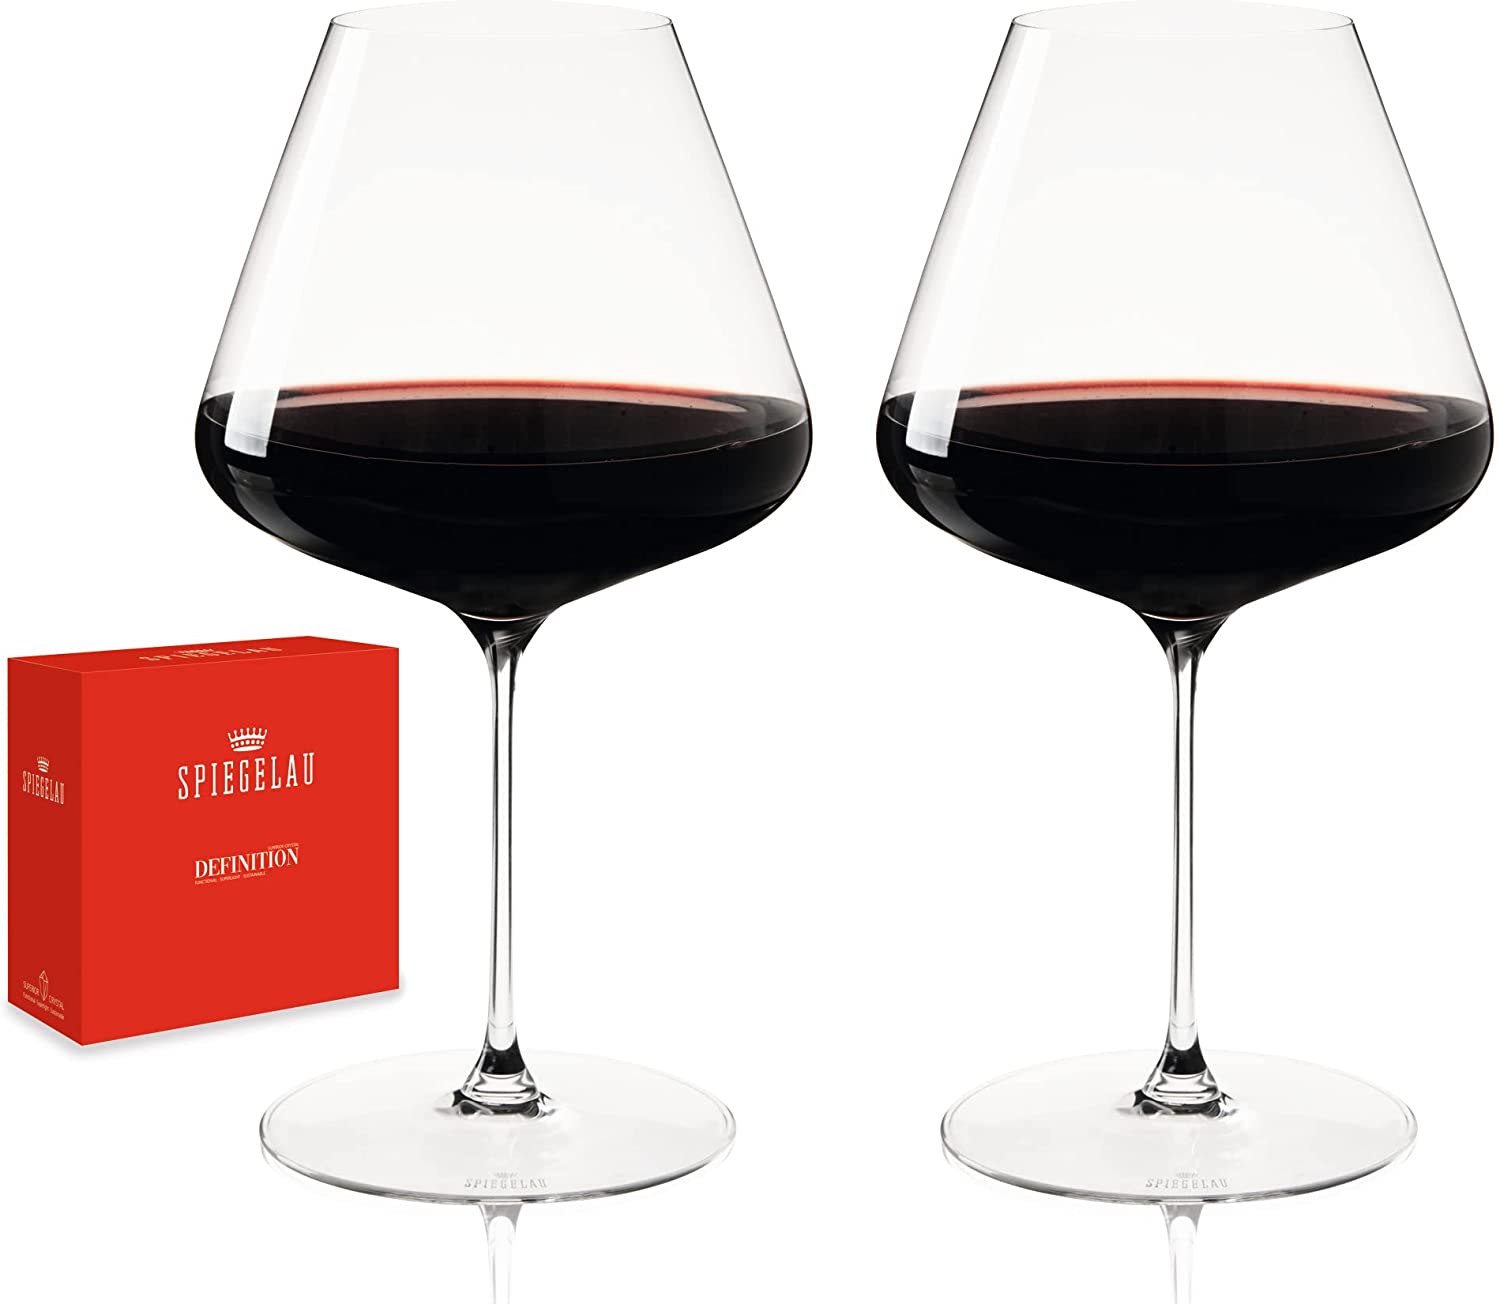 Spiegelau & Nachtmann, Set of 2 burgundy glasses, crystal glass, 960 ml, definition, 1350160